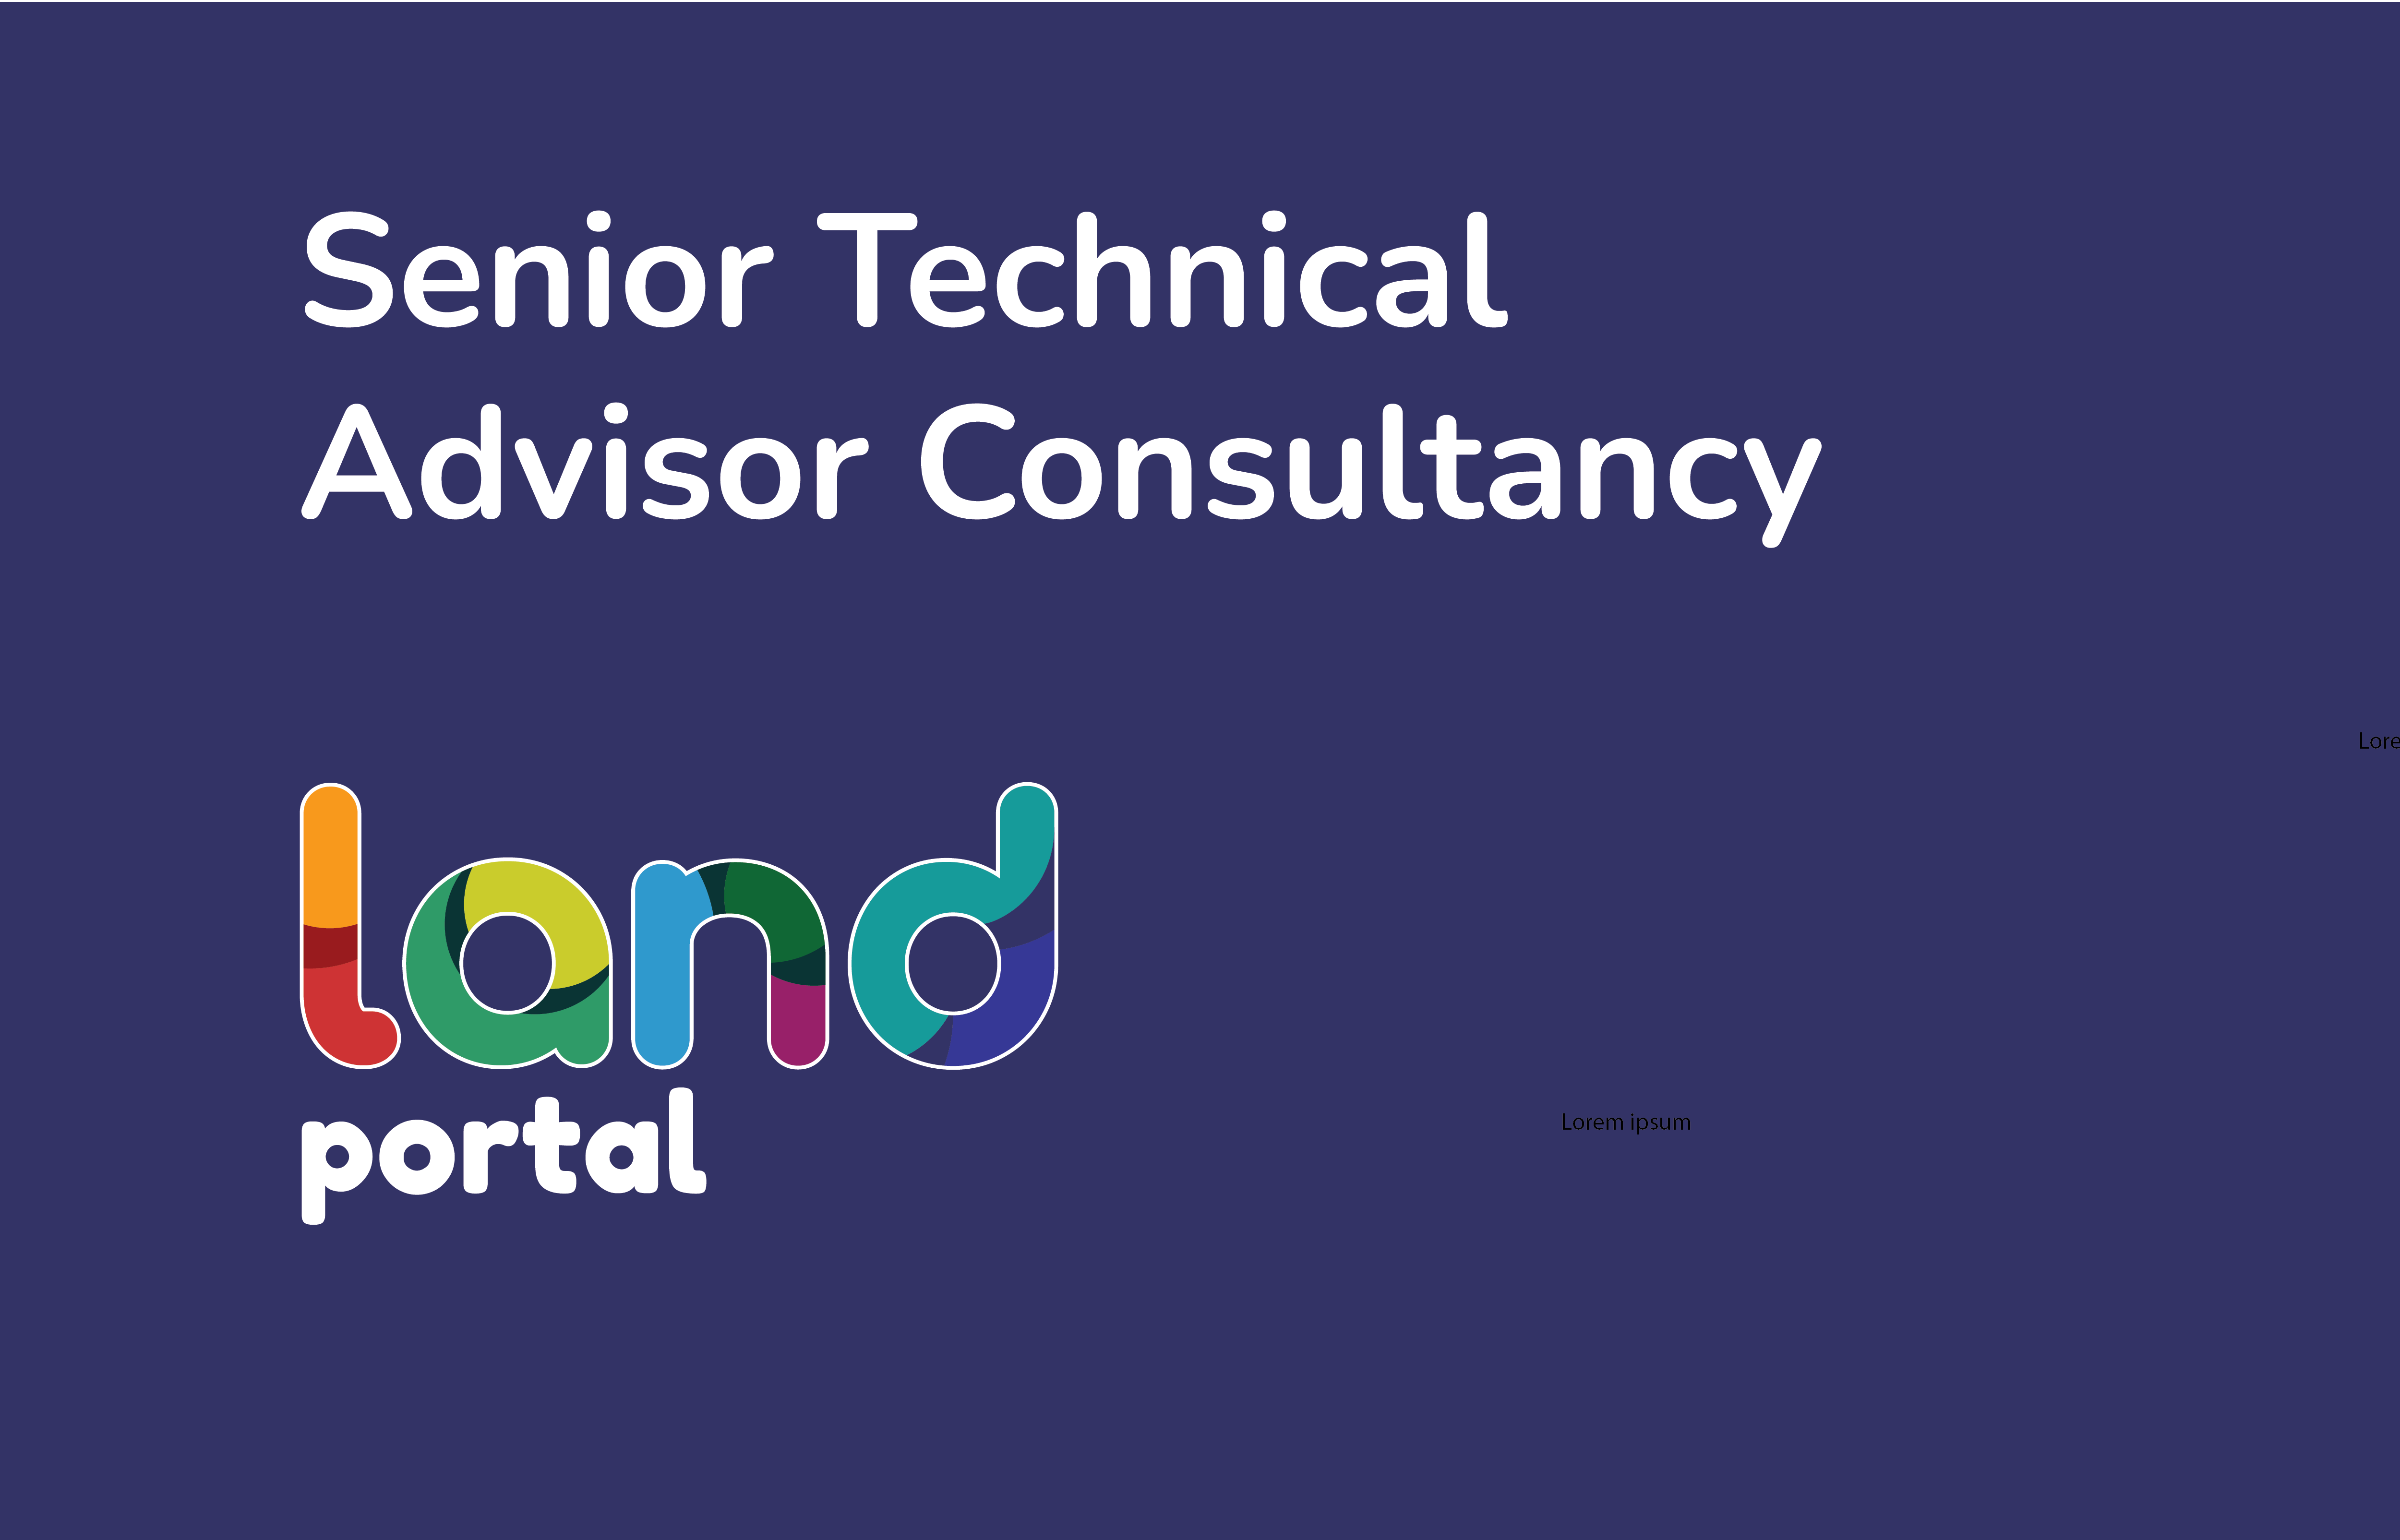 Senior Technical Advisor Consultancy